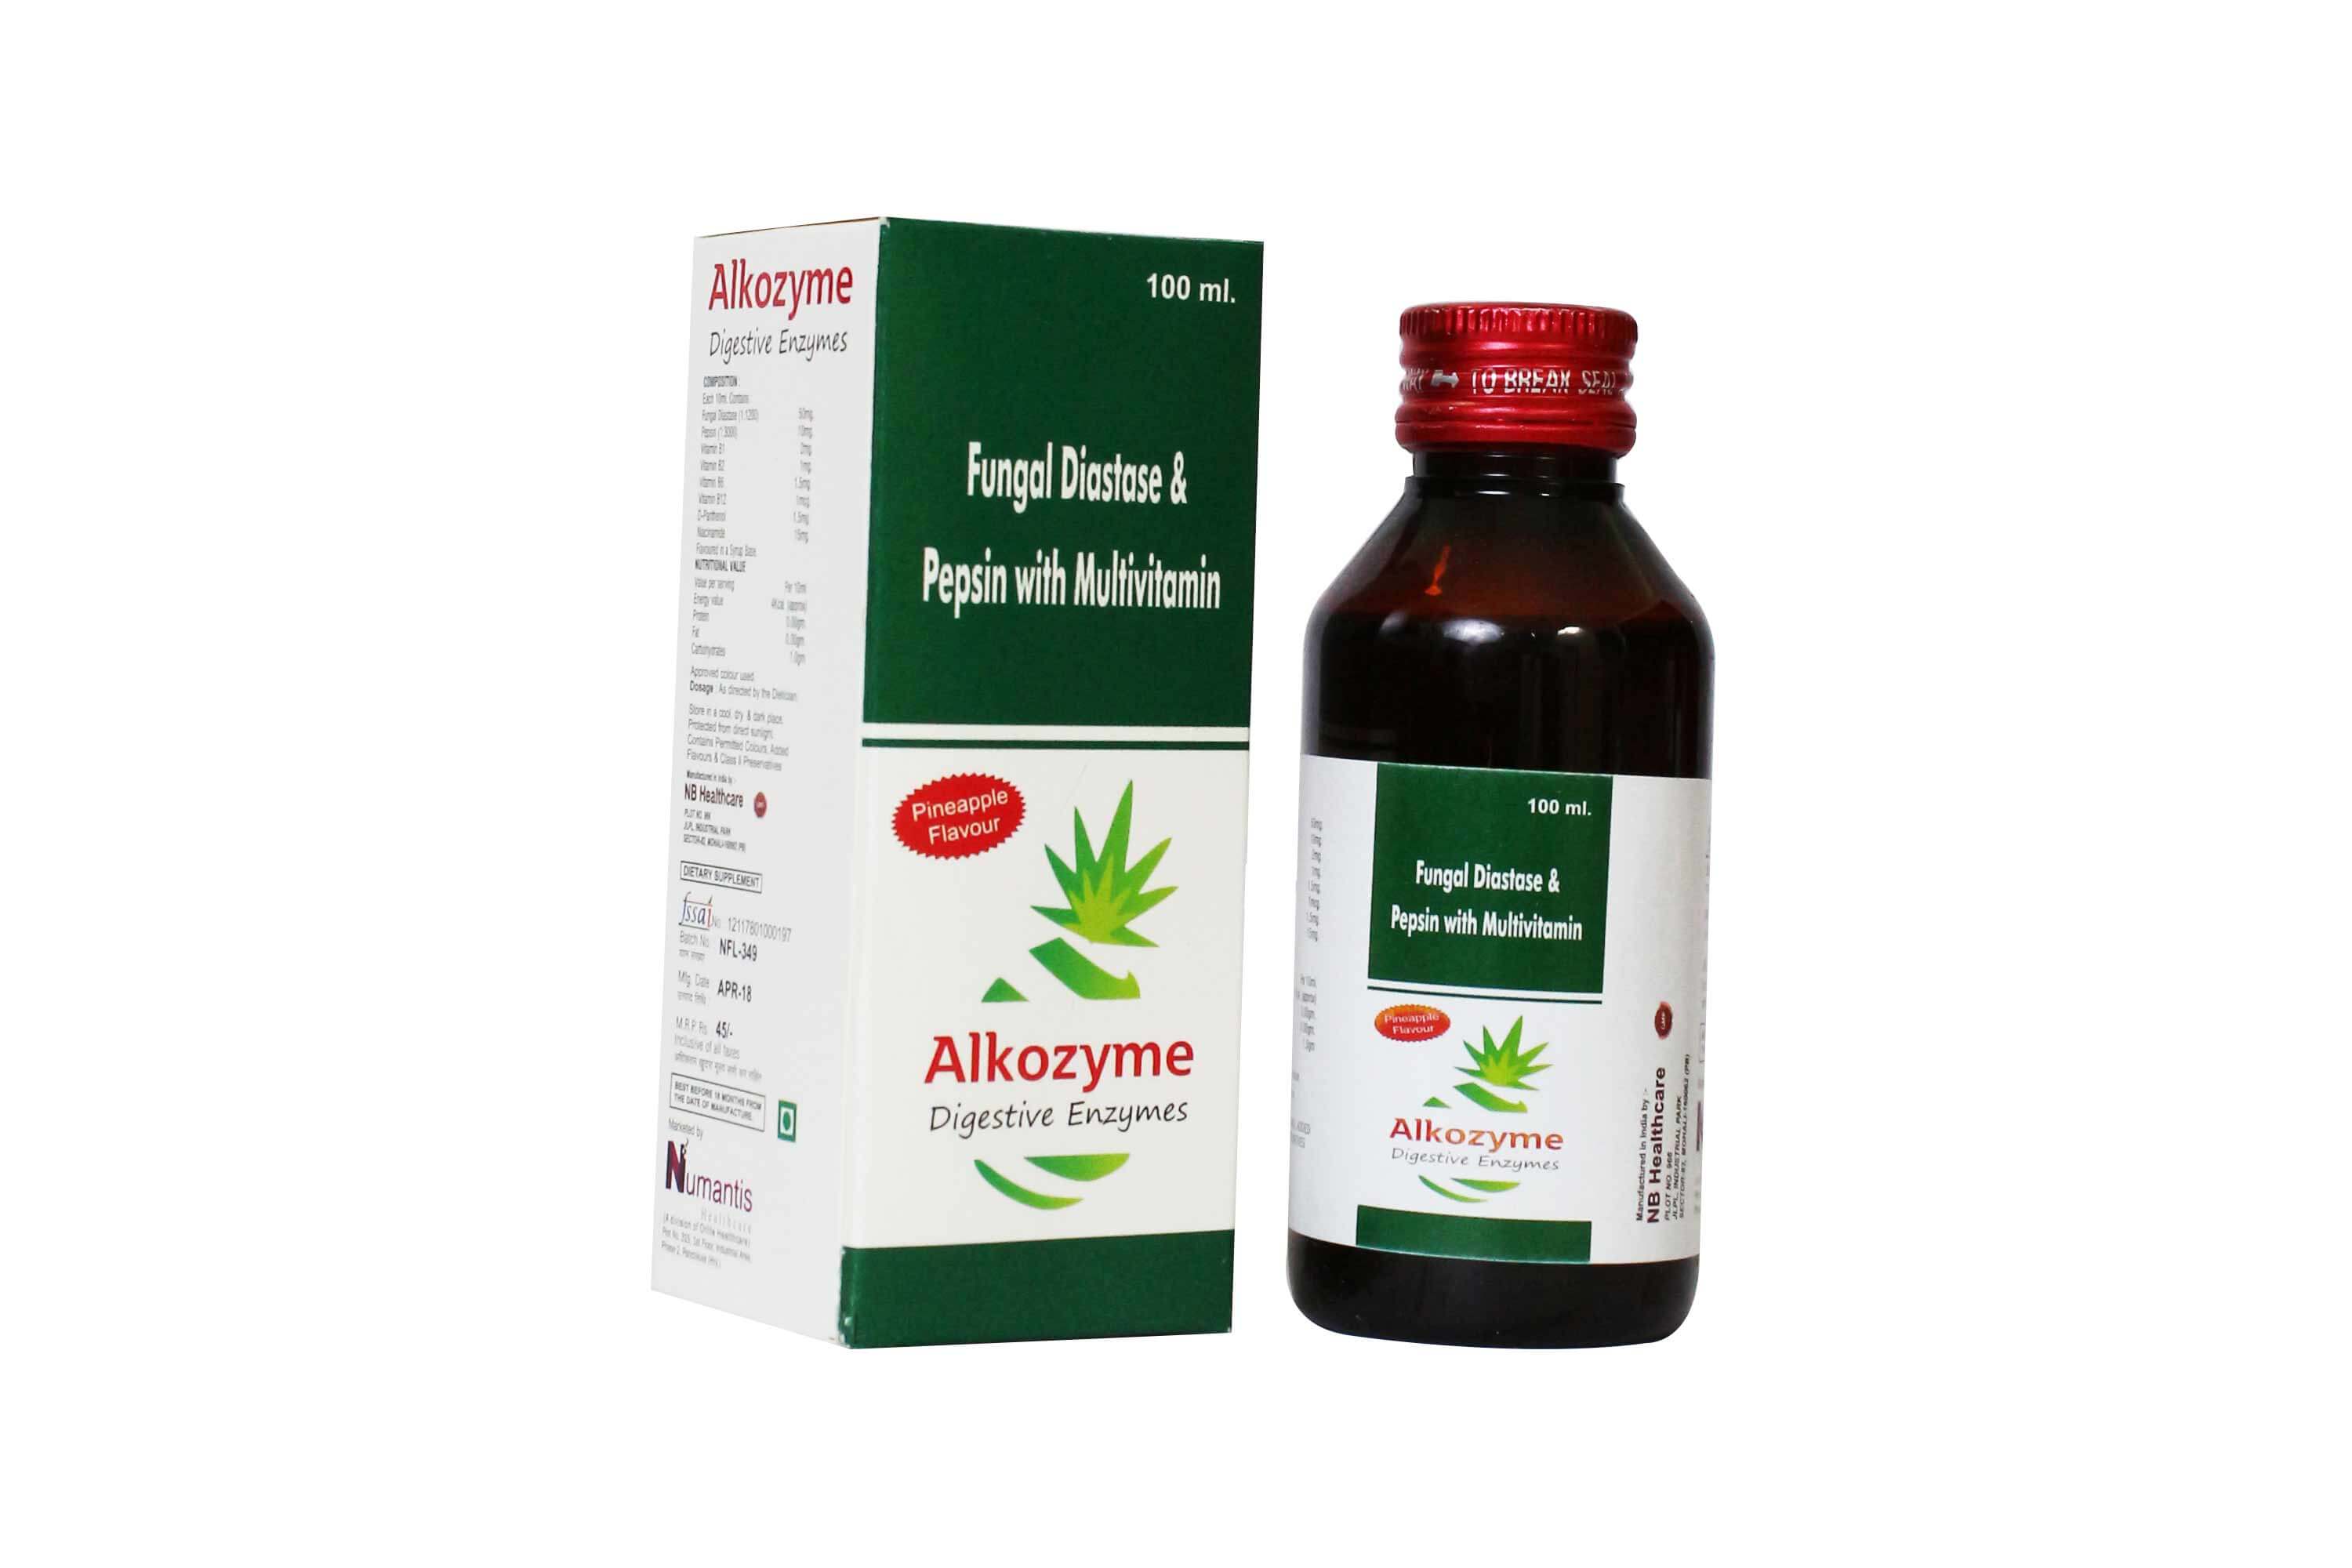 Product Name: Alkozyme, Compositions of Alkozyme are Fungal Diastate  & Pepsin Multivitamin - Numantis Healthcare